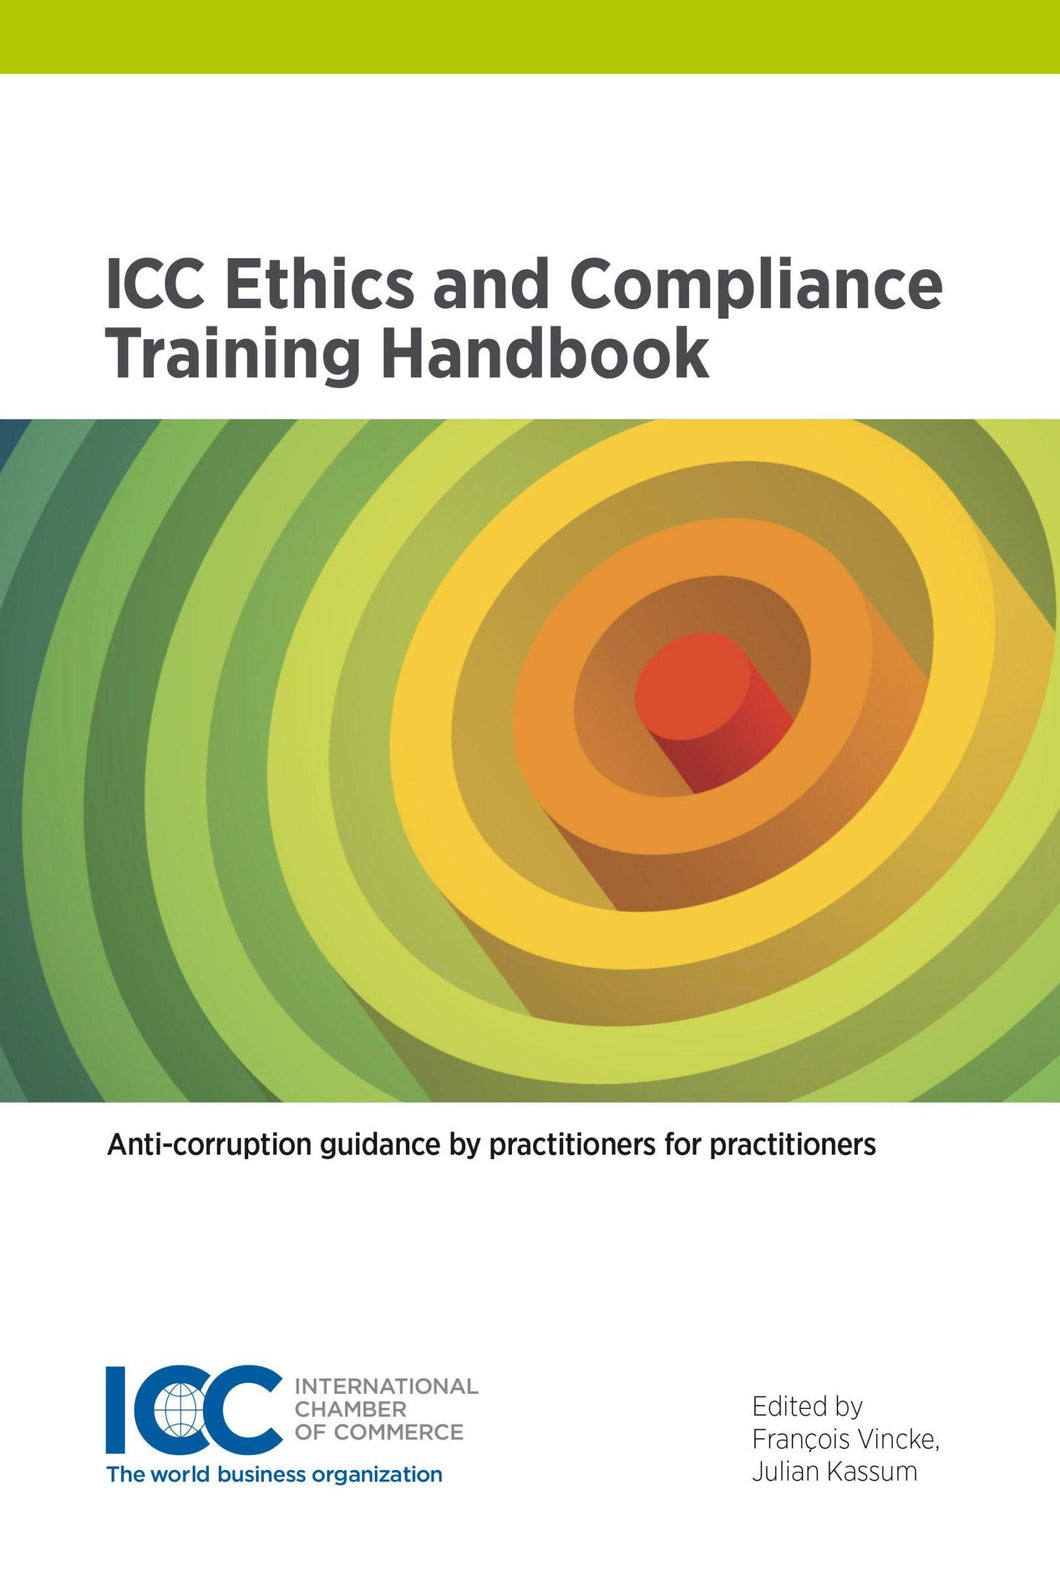 ICC Ethics and Compliance Training Handbook